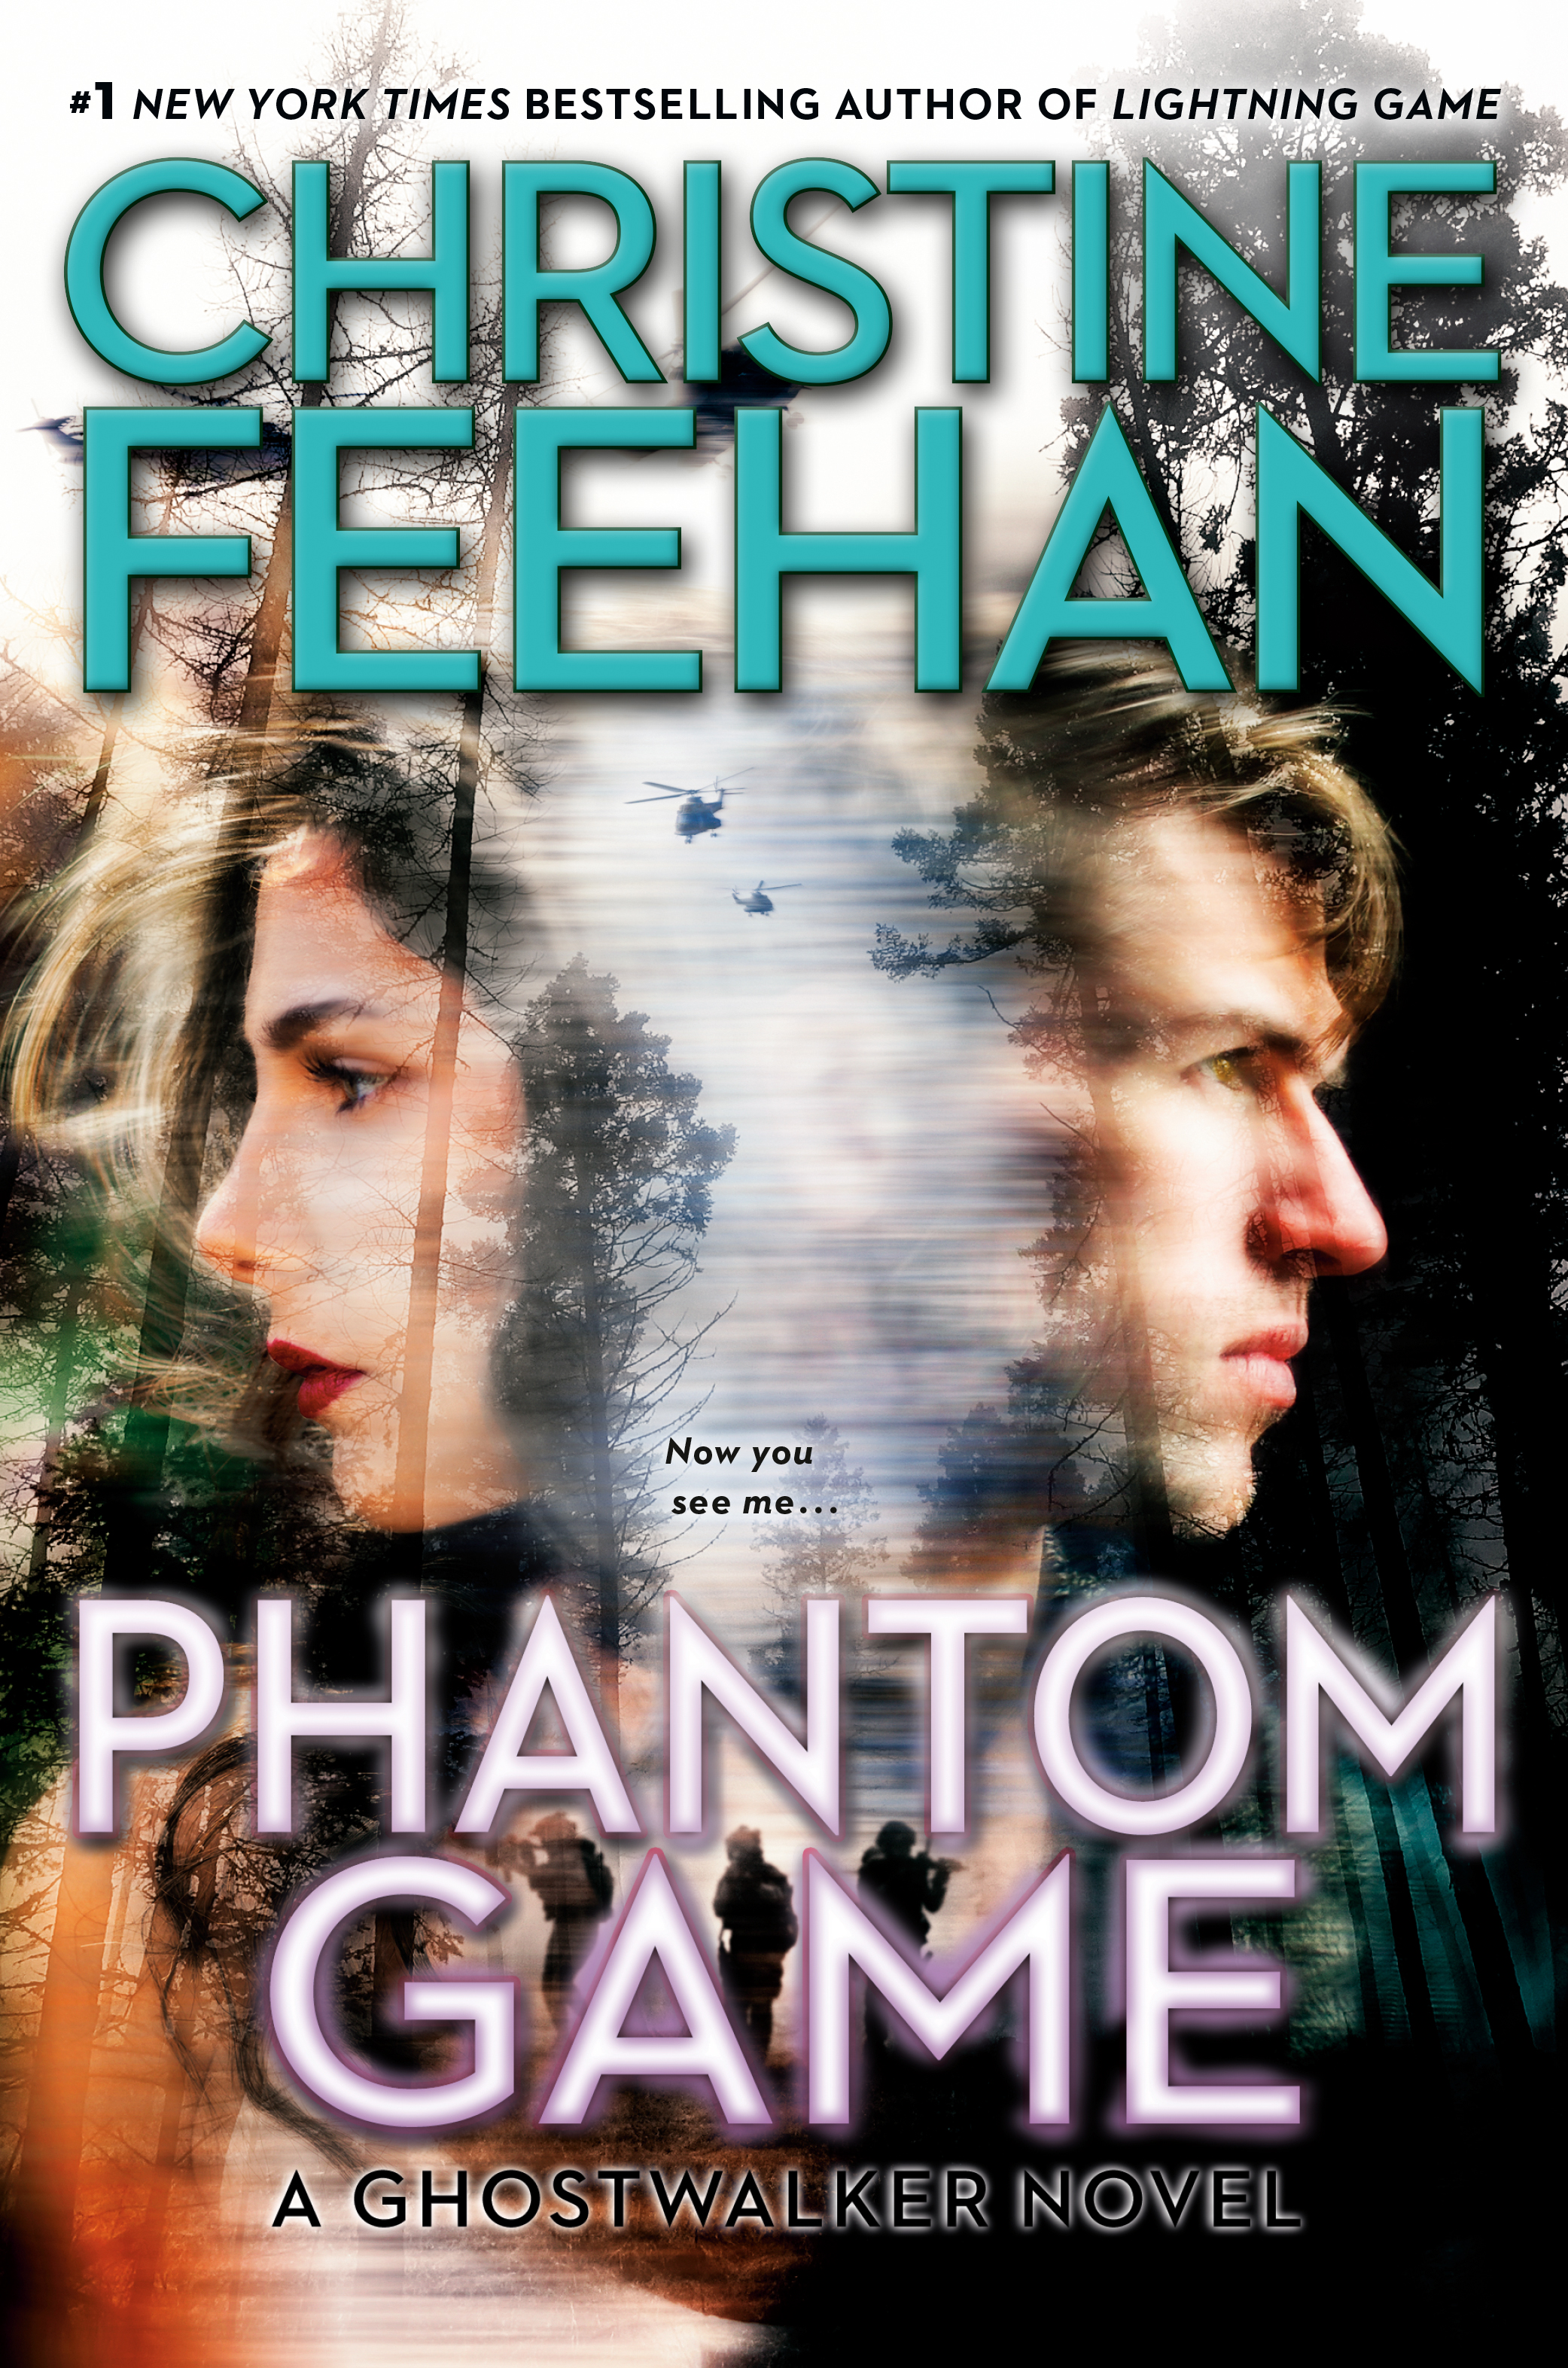 Phantom Game in paperback